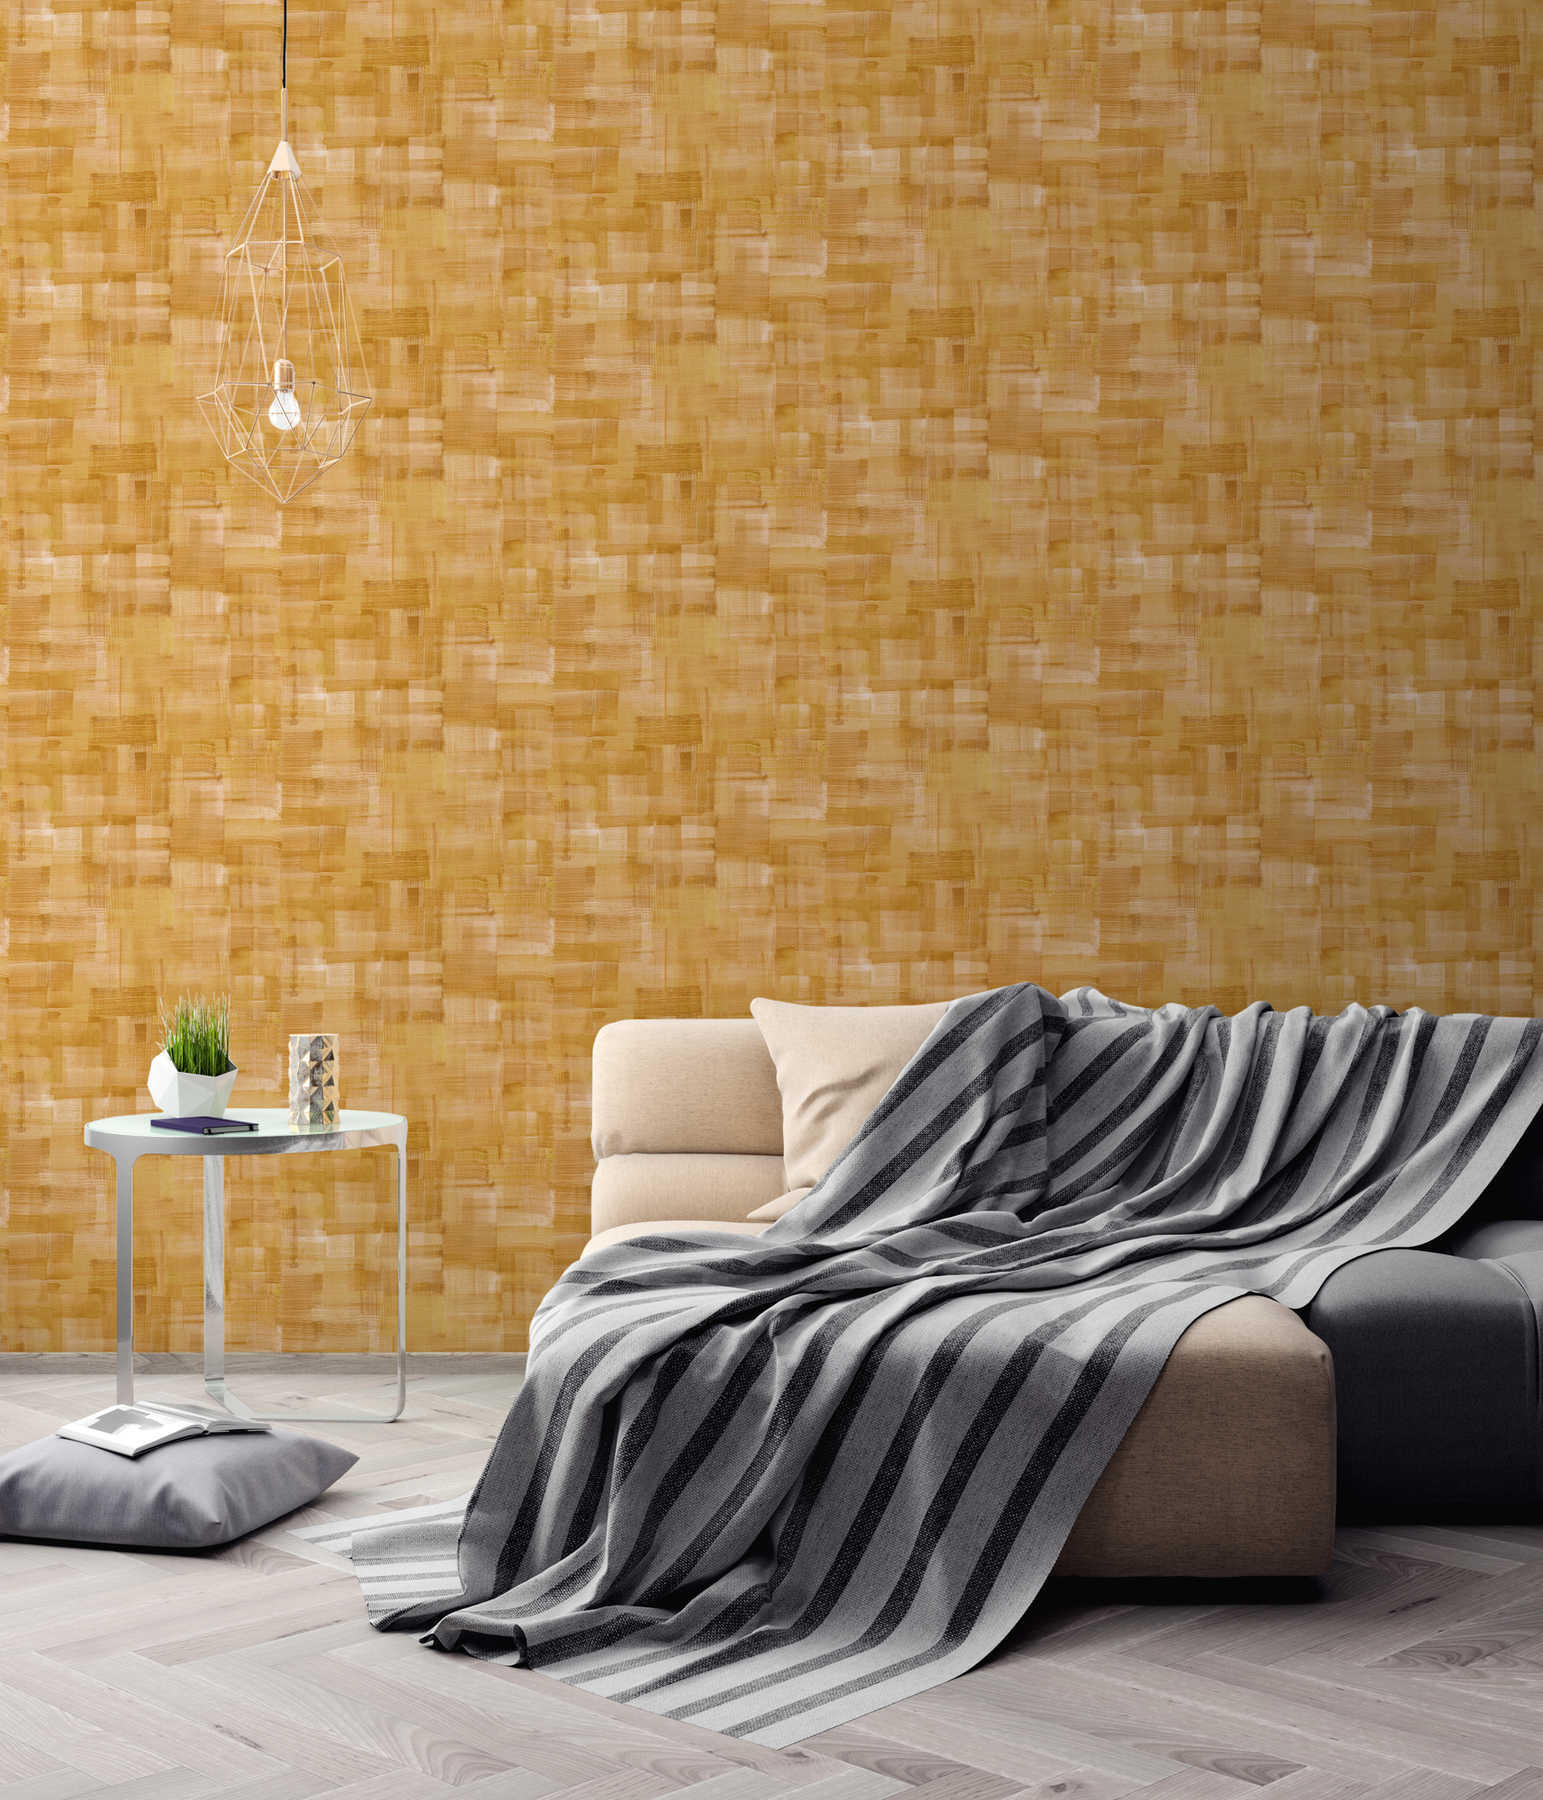             Wallpaper canvas structure, modern art - yellow, orange
        